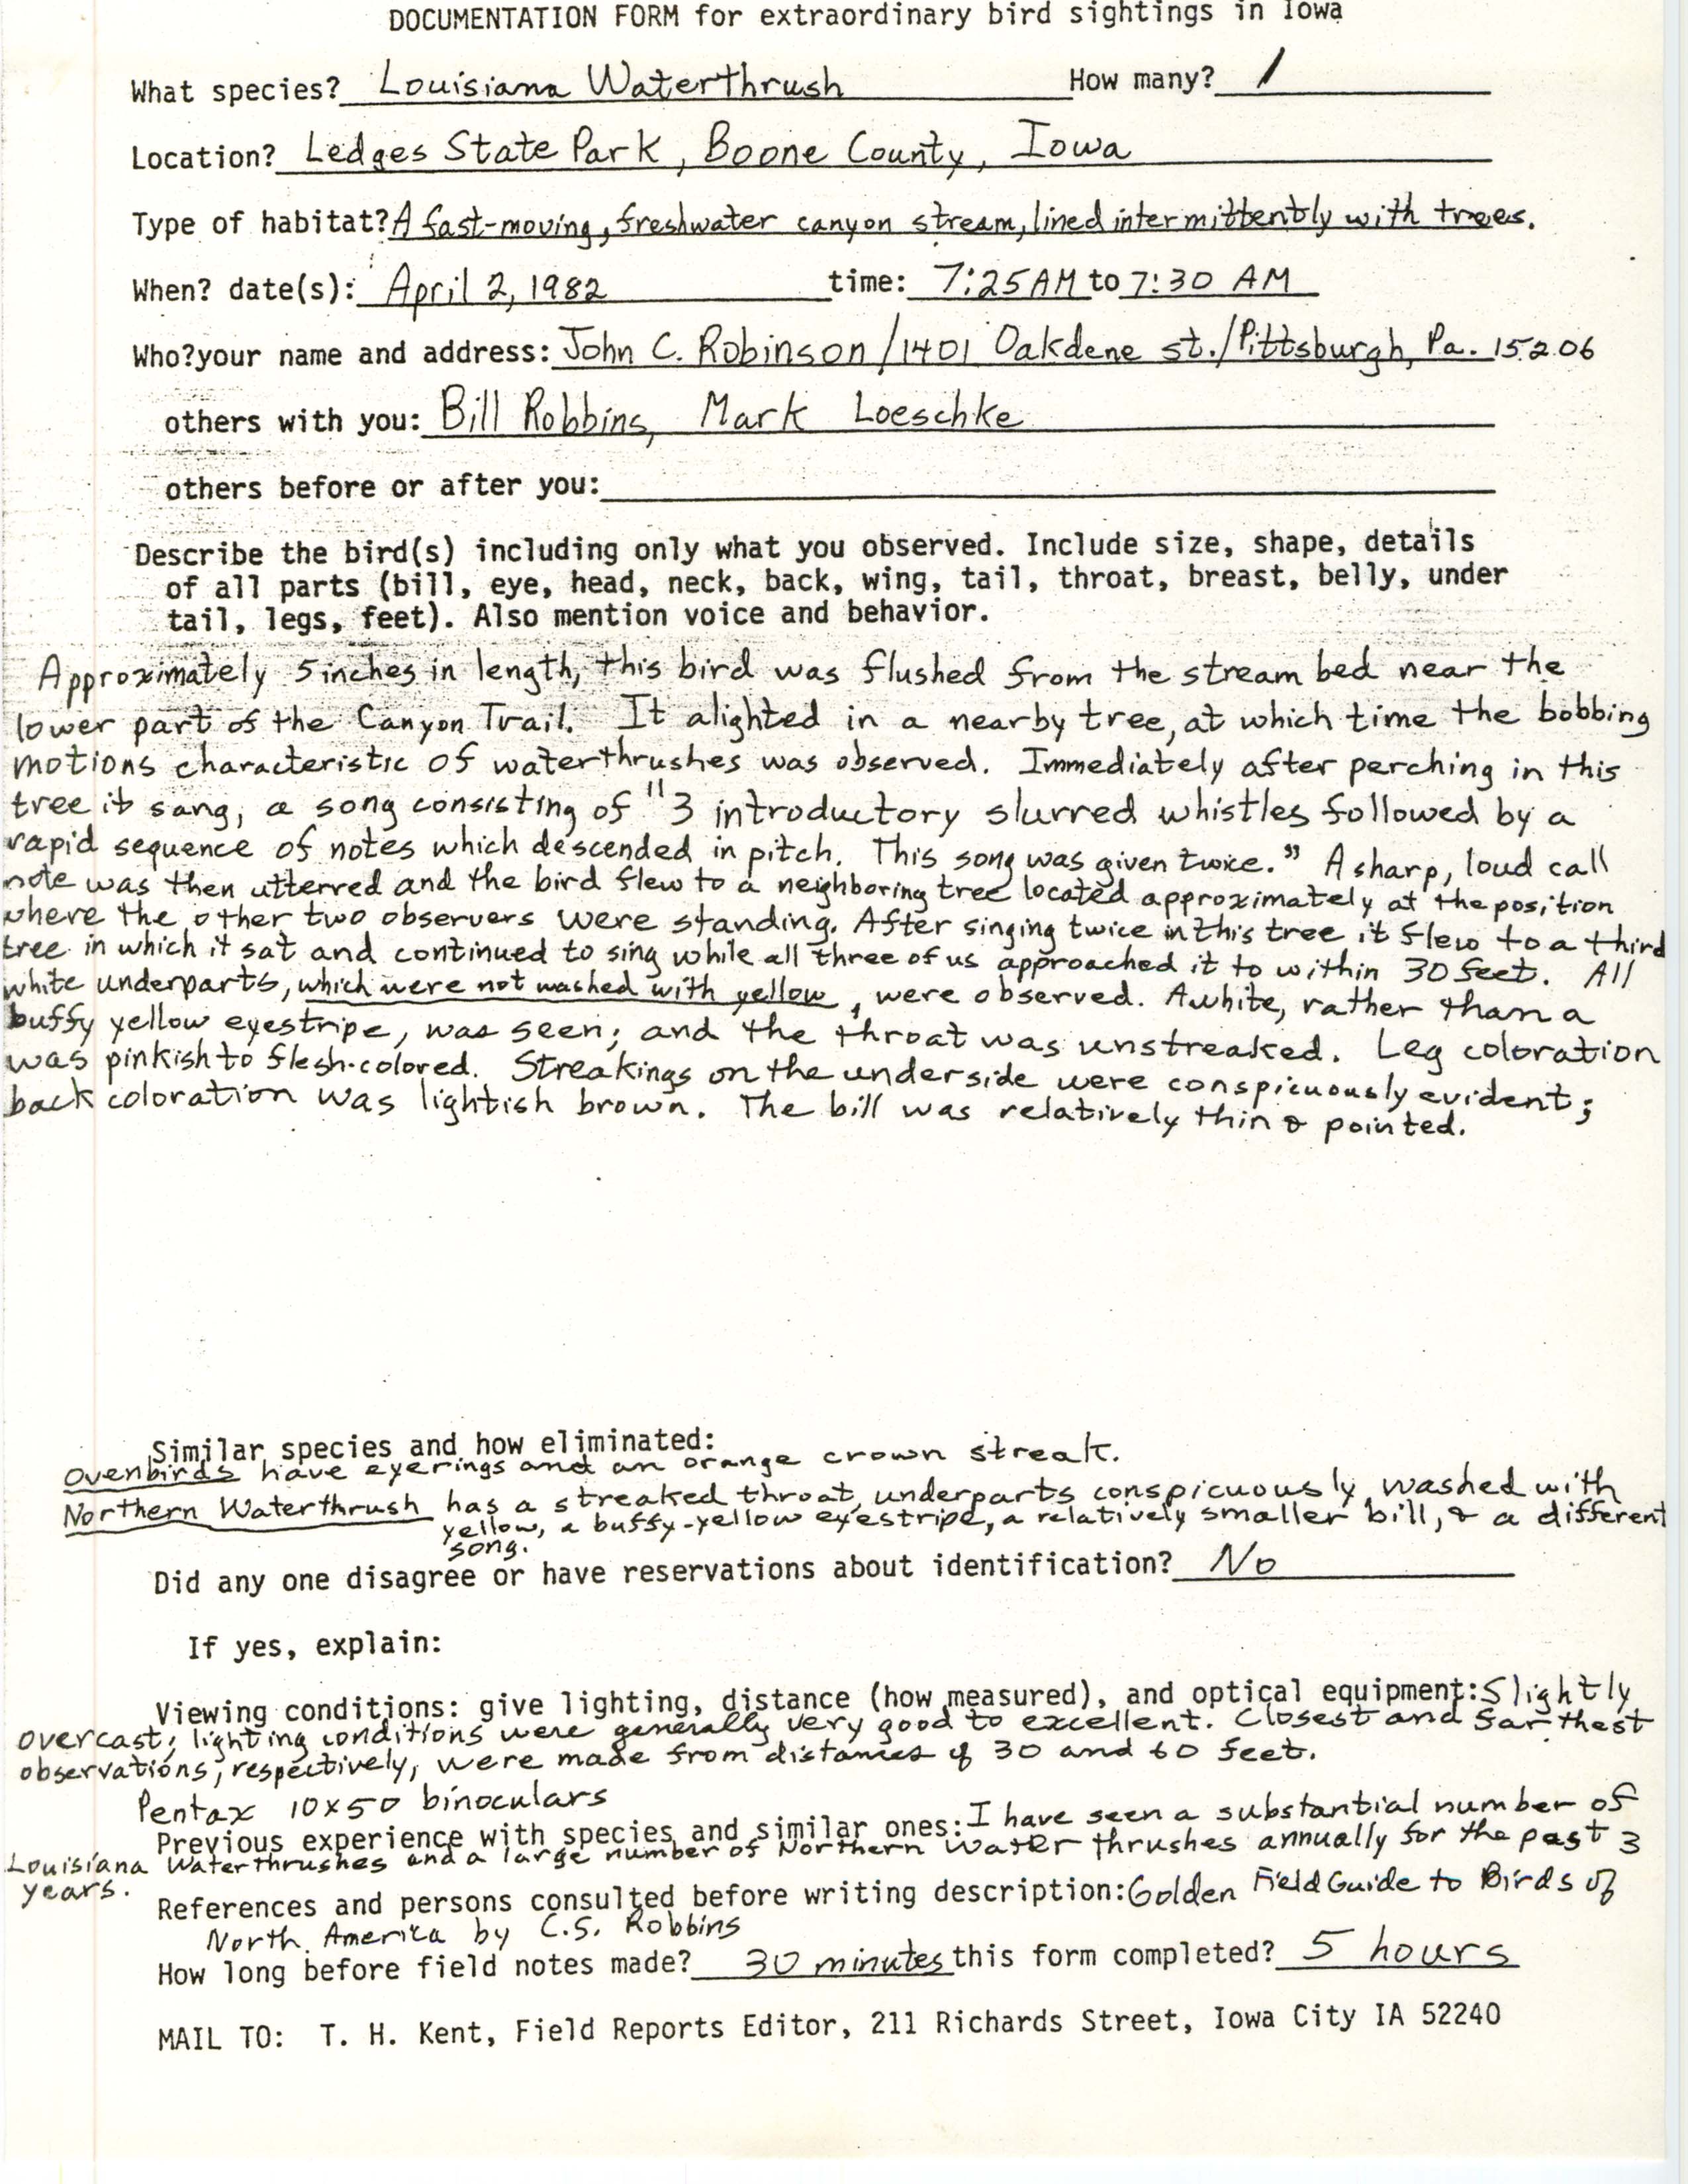 Rare bird documentation form for Louisiana Waterthrush at Ledges State Park, 1982